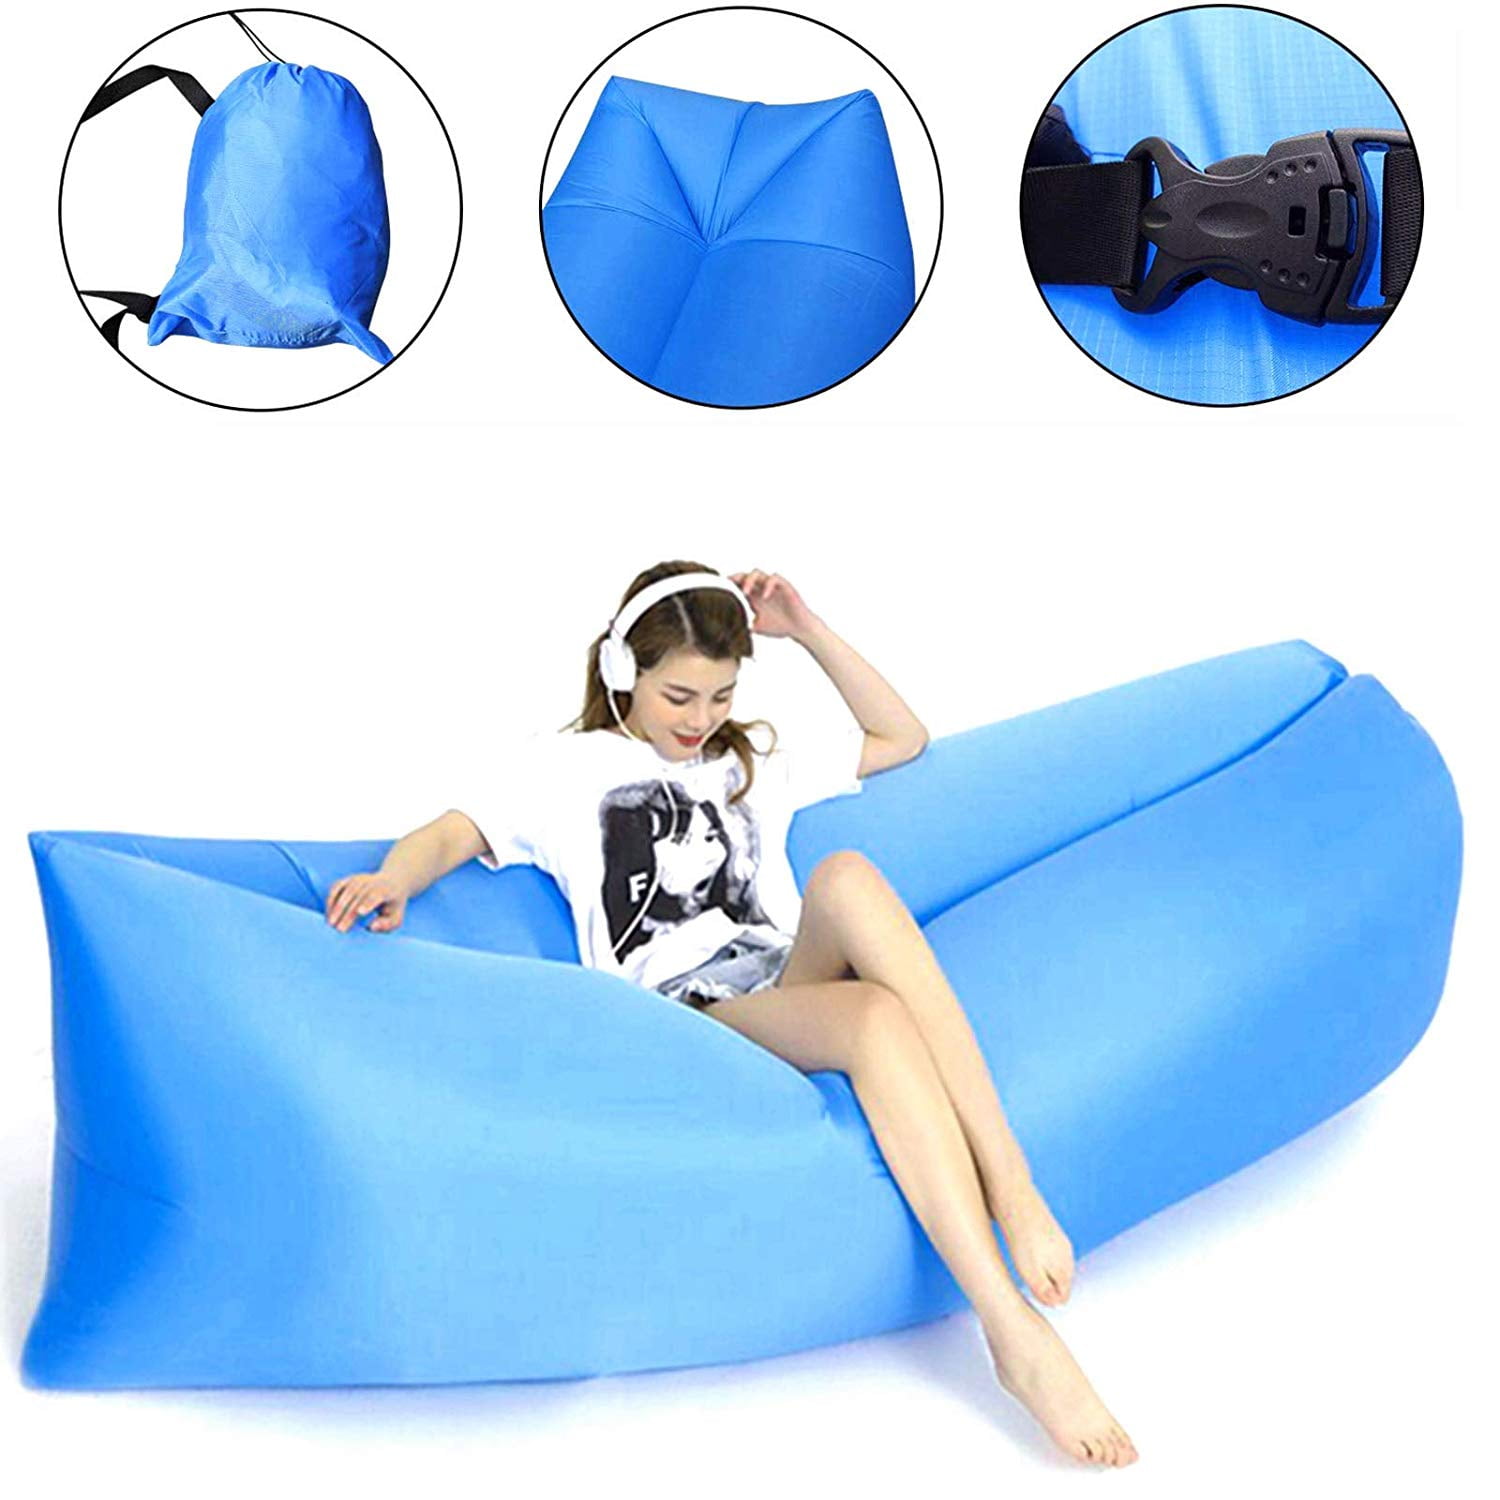 Inflatable Lounger Air Sofa, Portable Hammock Lazy Beach